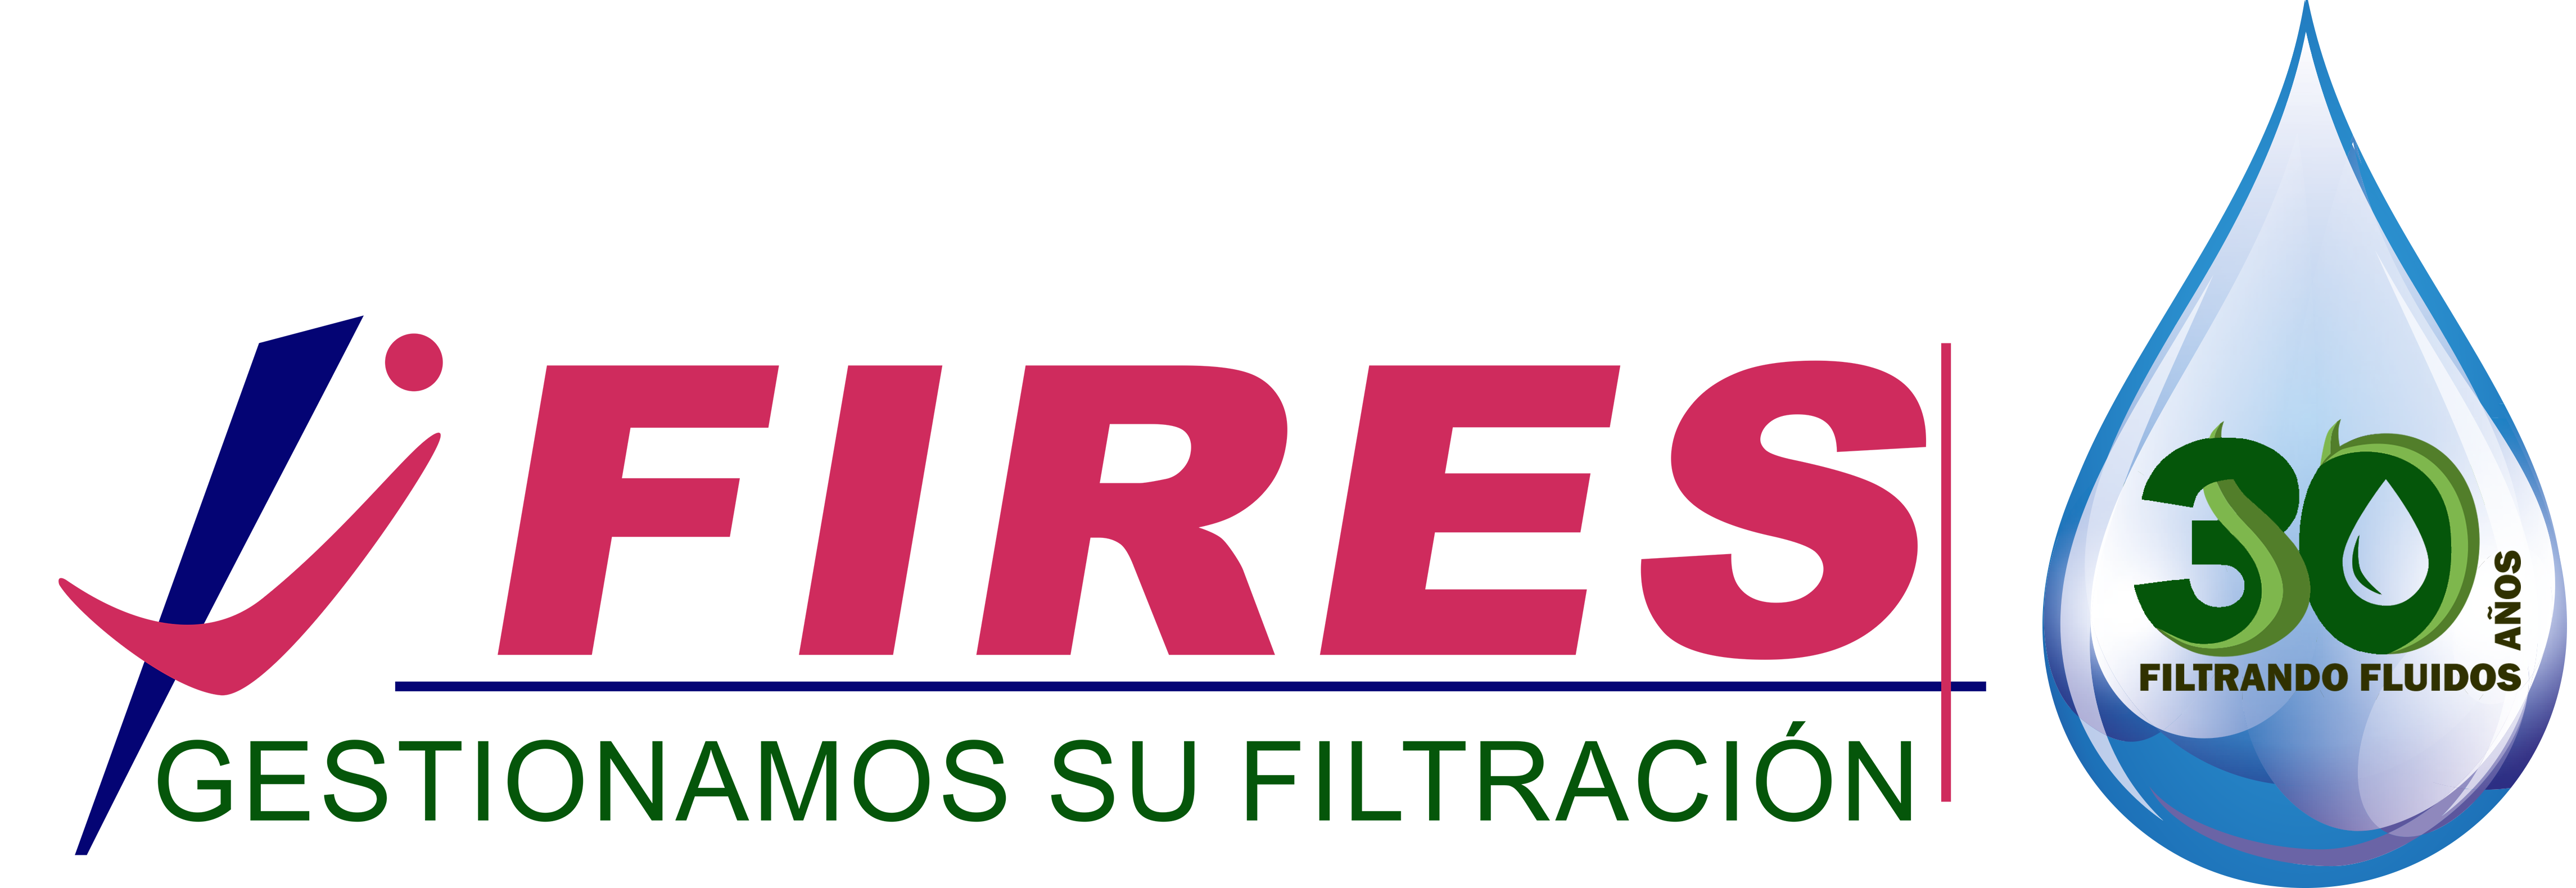 www.fires.es